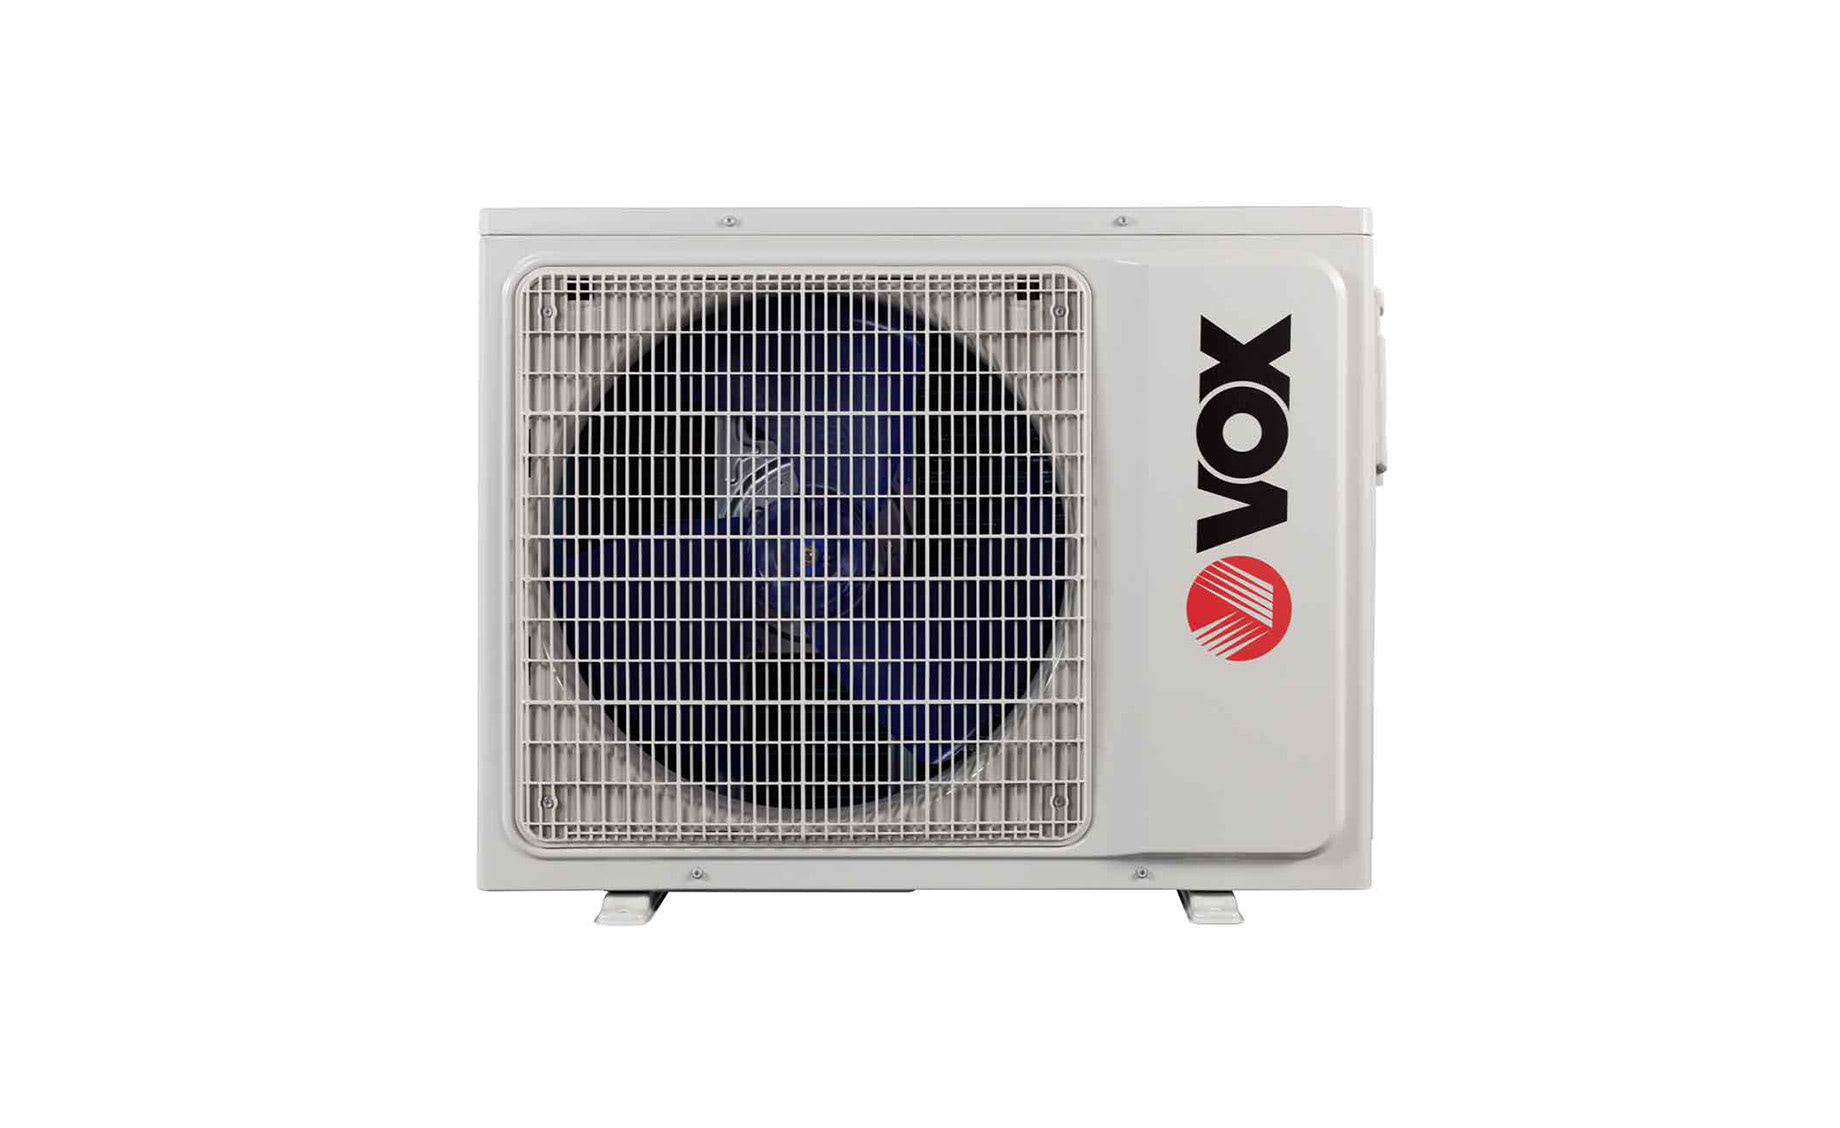 Vox IVA7-12HRGW klima uređaj